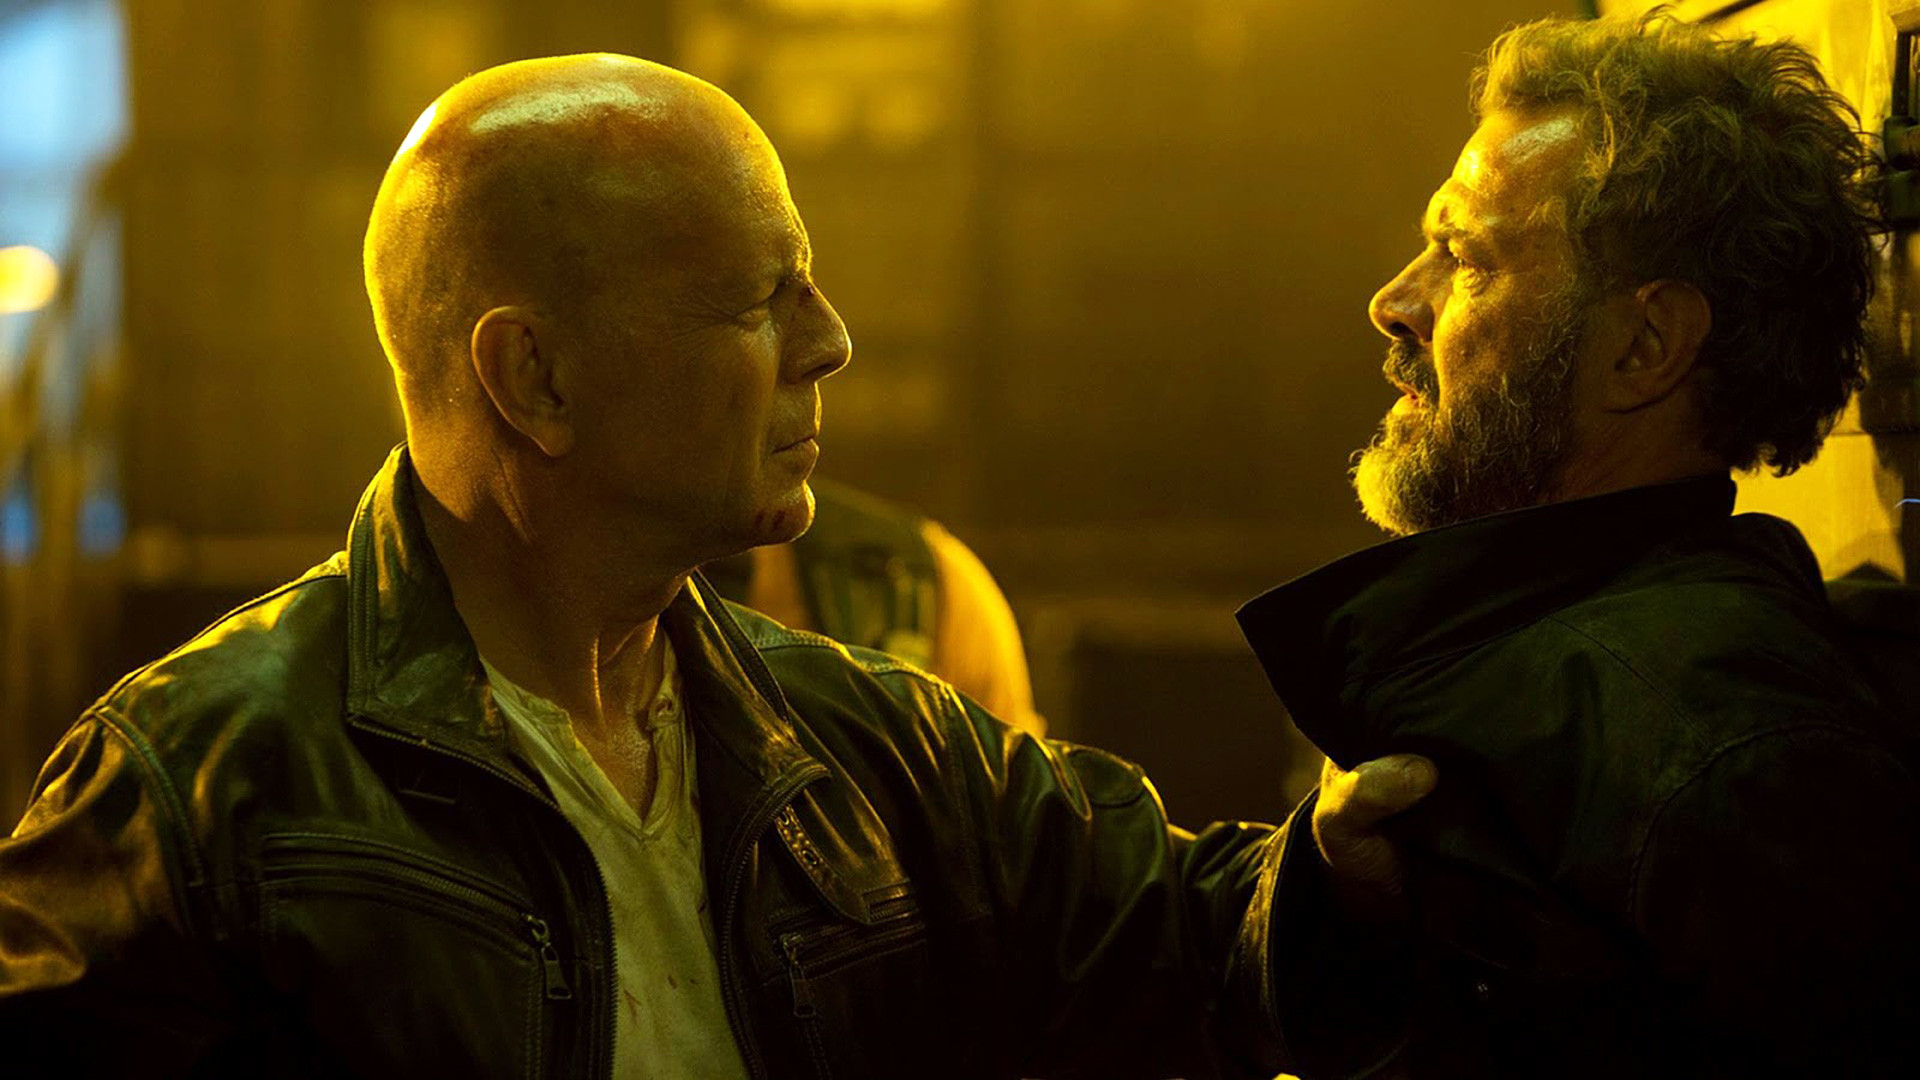 Yuri Komarov (right), A Good Day to Die Hard (2013, Die Hard film series)